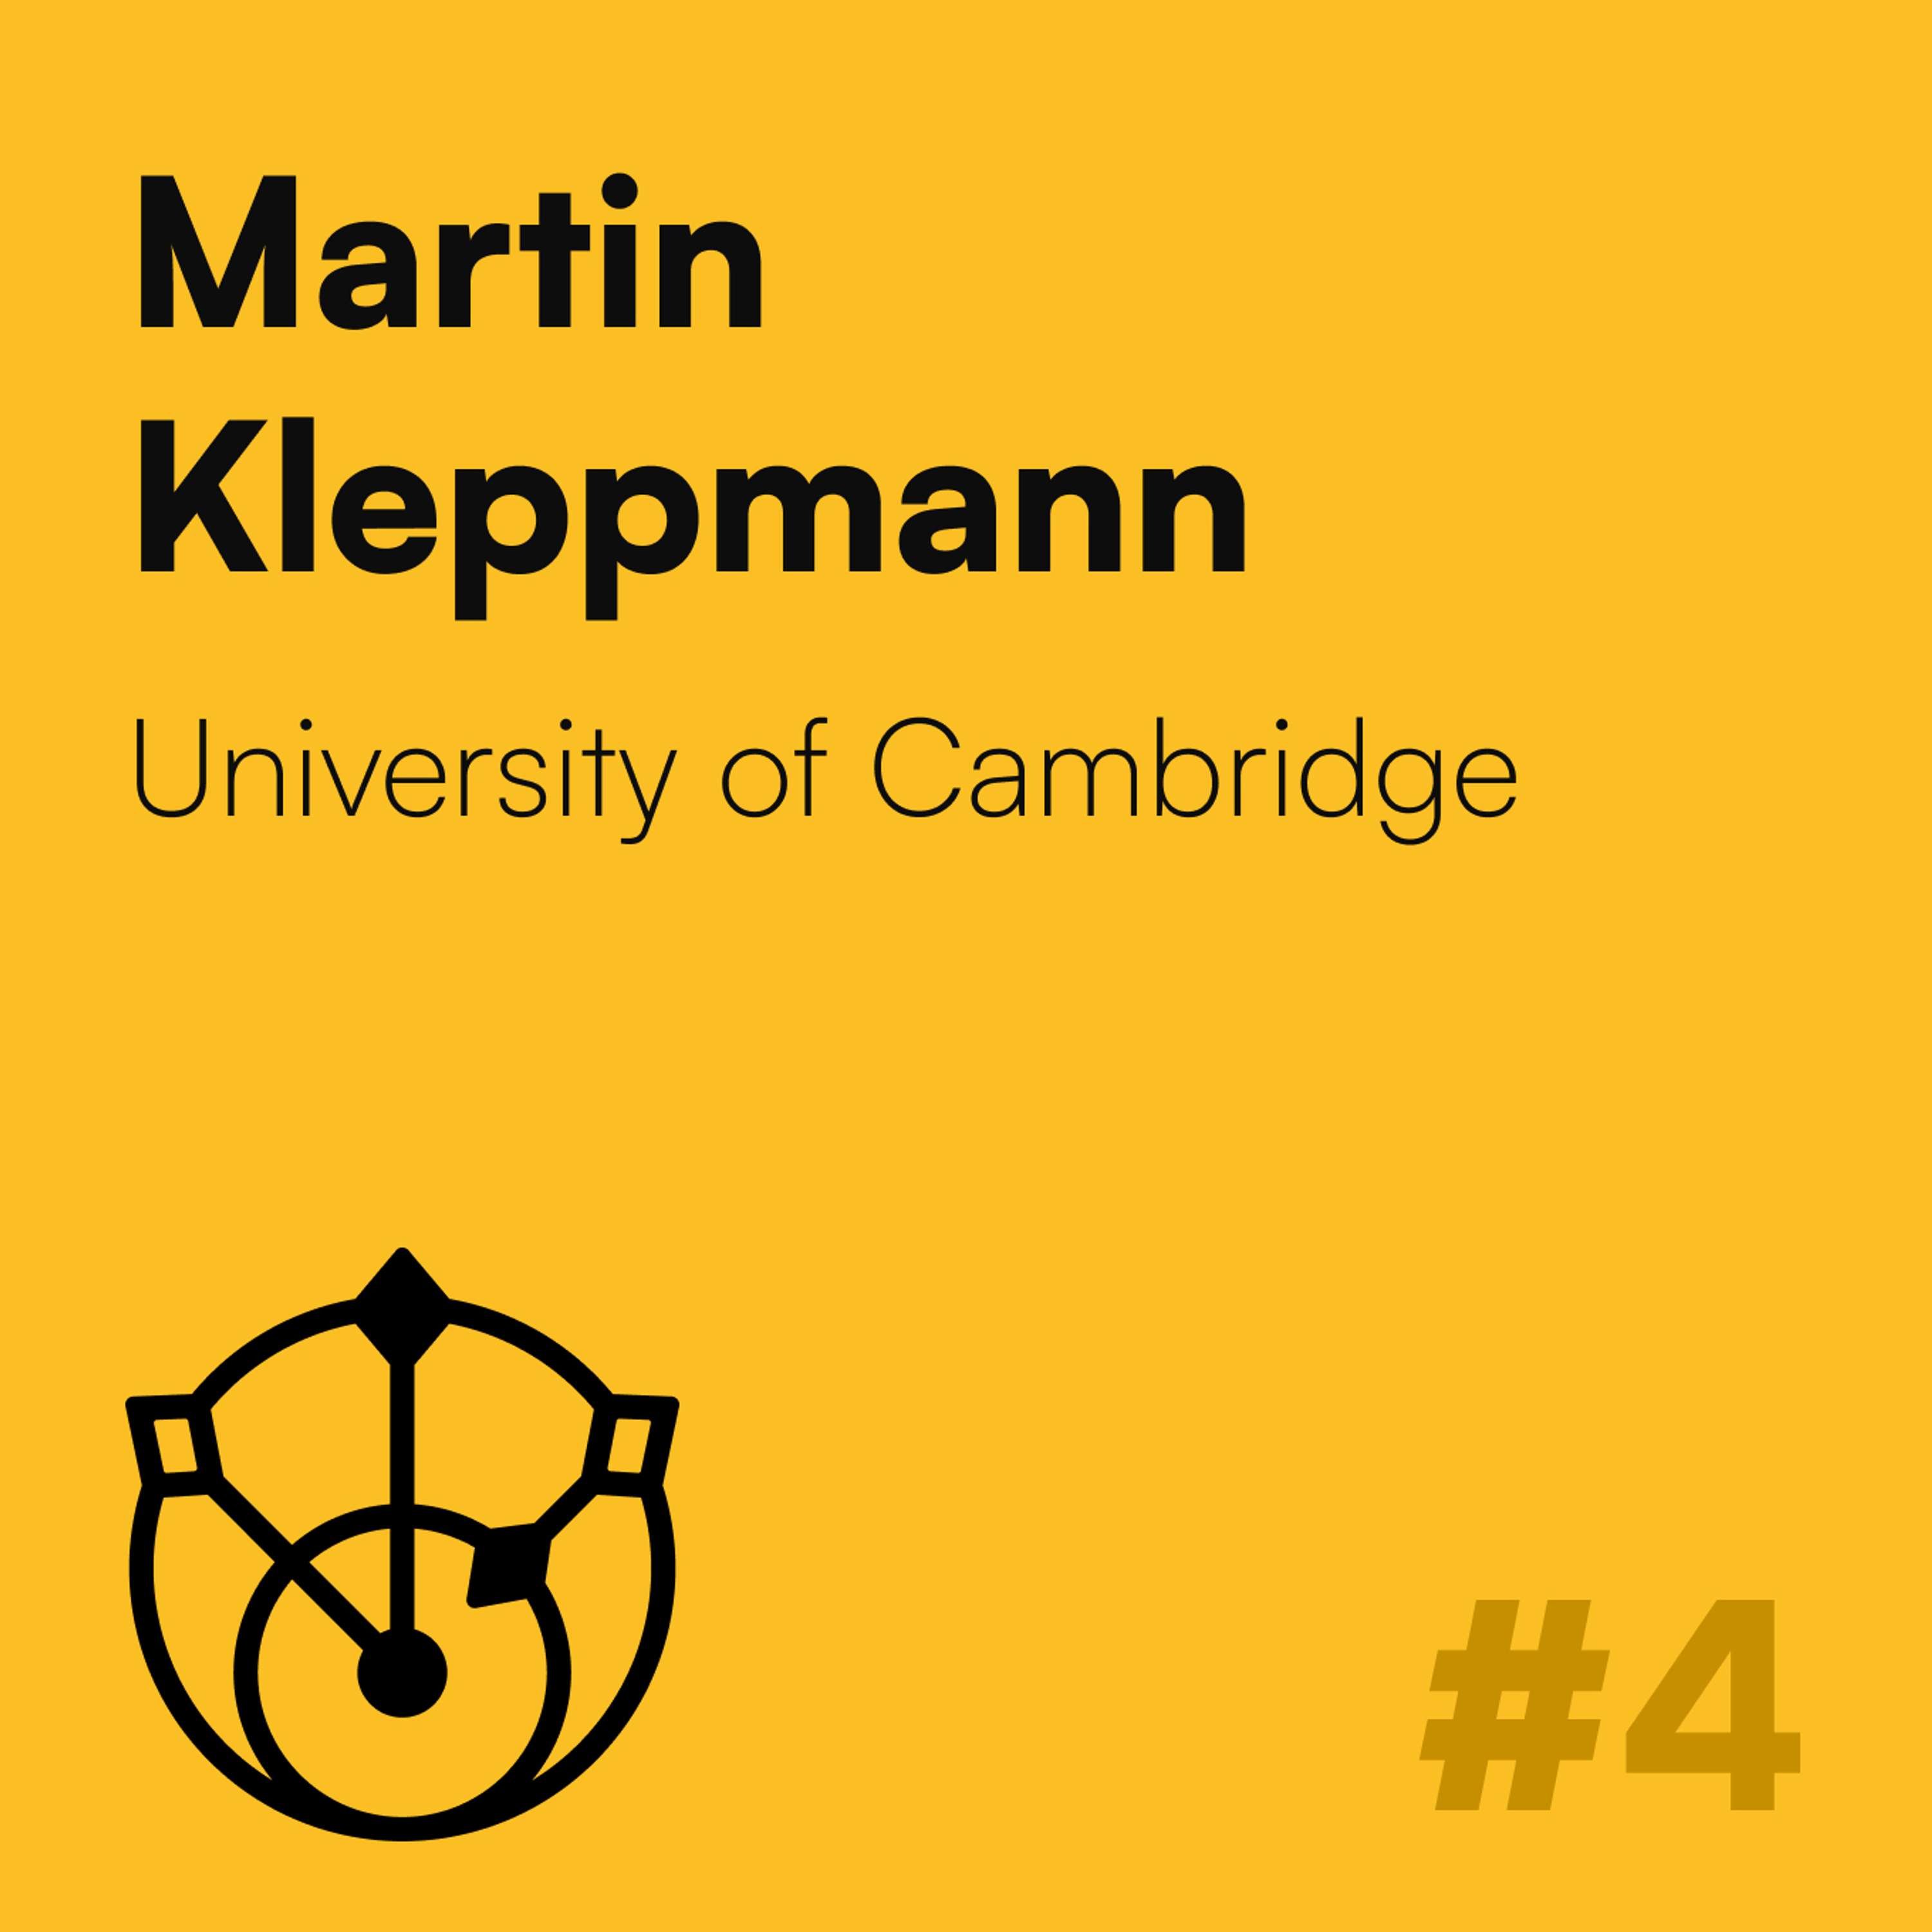 #4 – Martin Kleppmann: CRDTs, Automerge, generic syncing servers & Bluesky